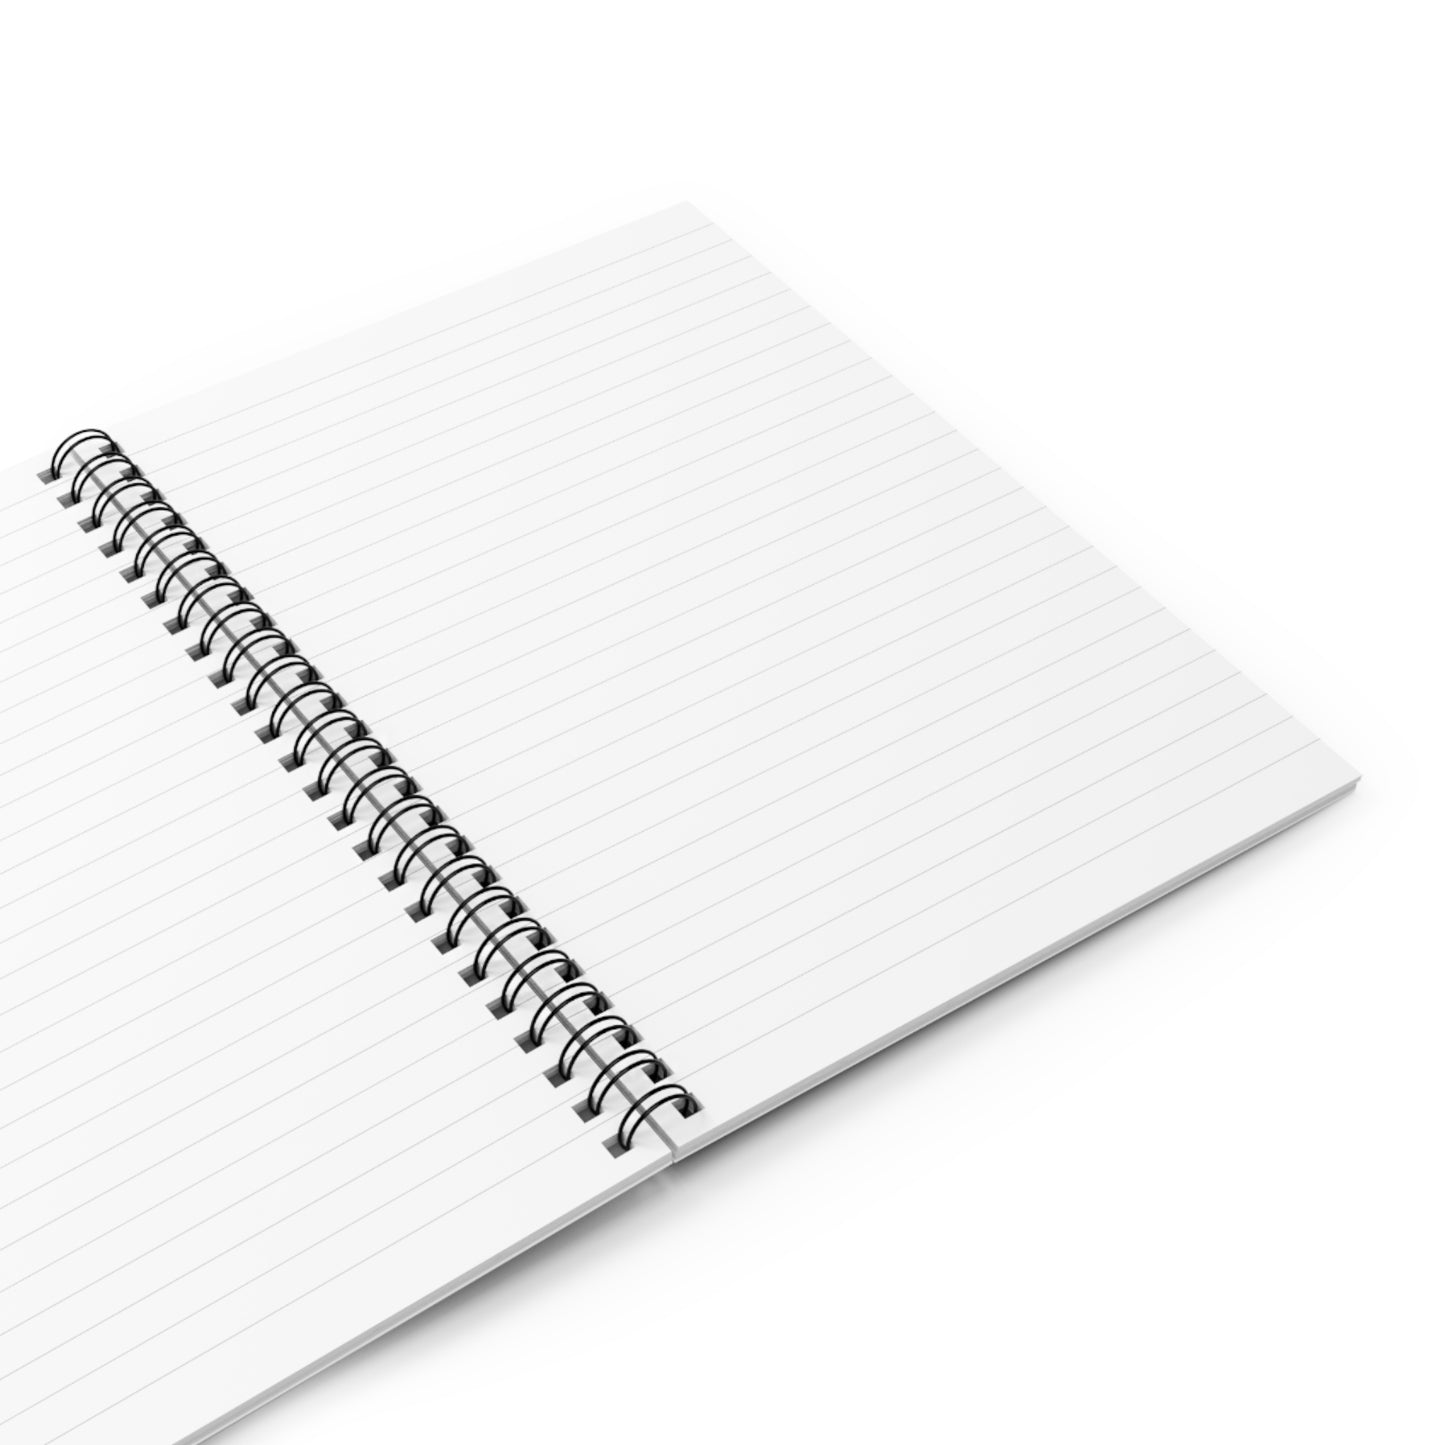 Notebook: Ultrabloom - Ruled Line